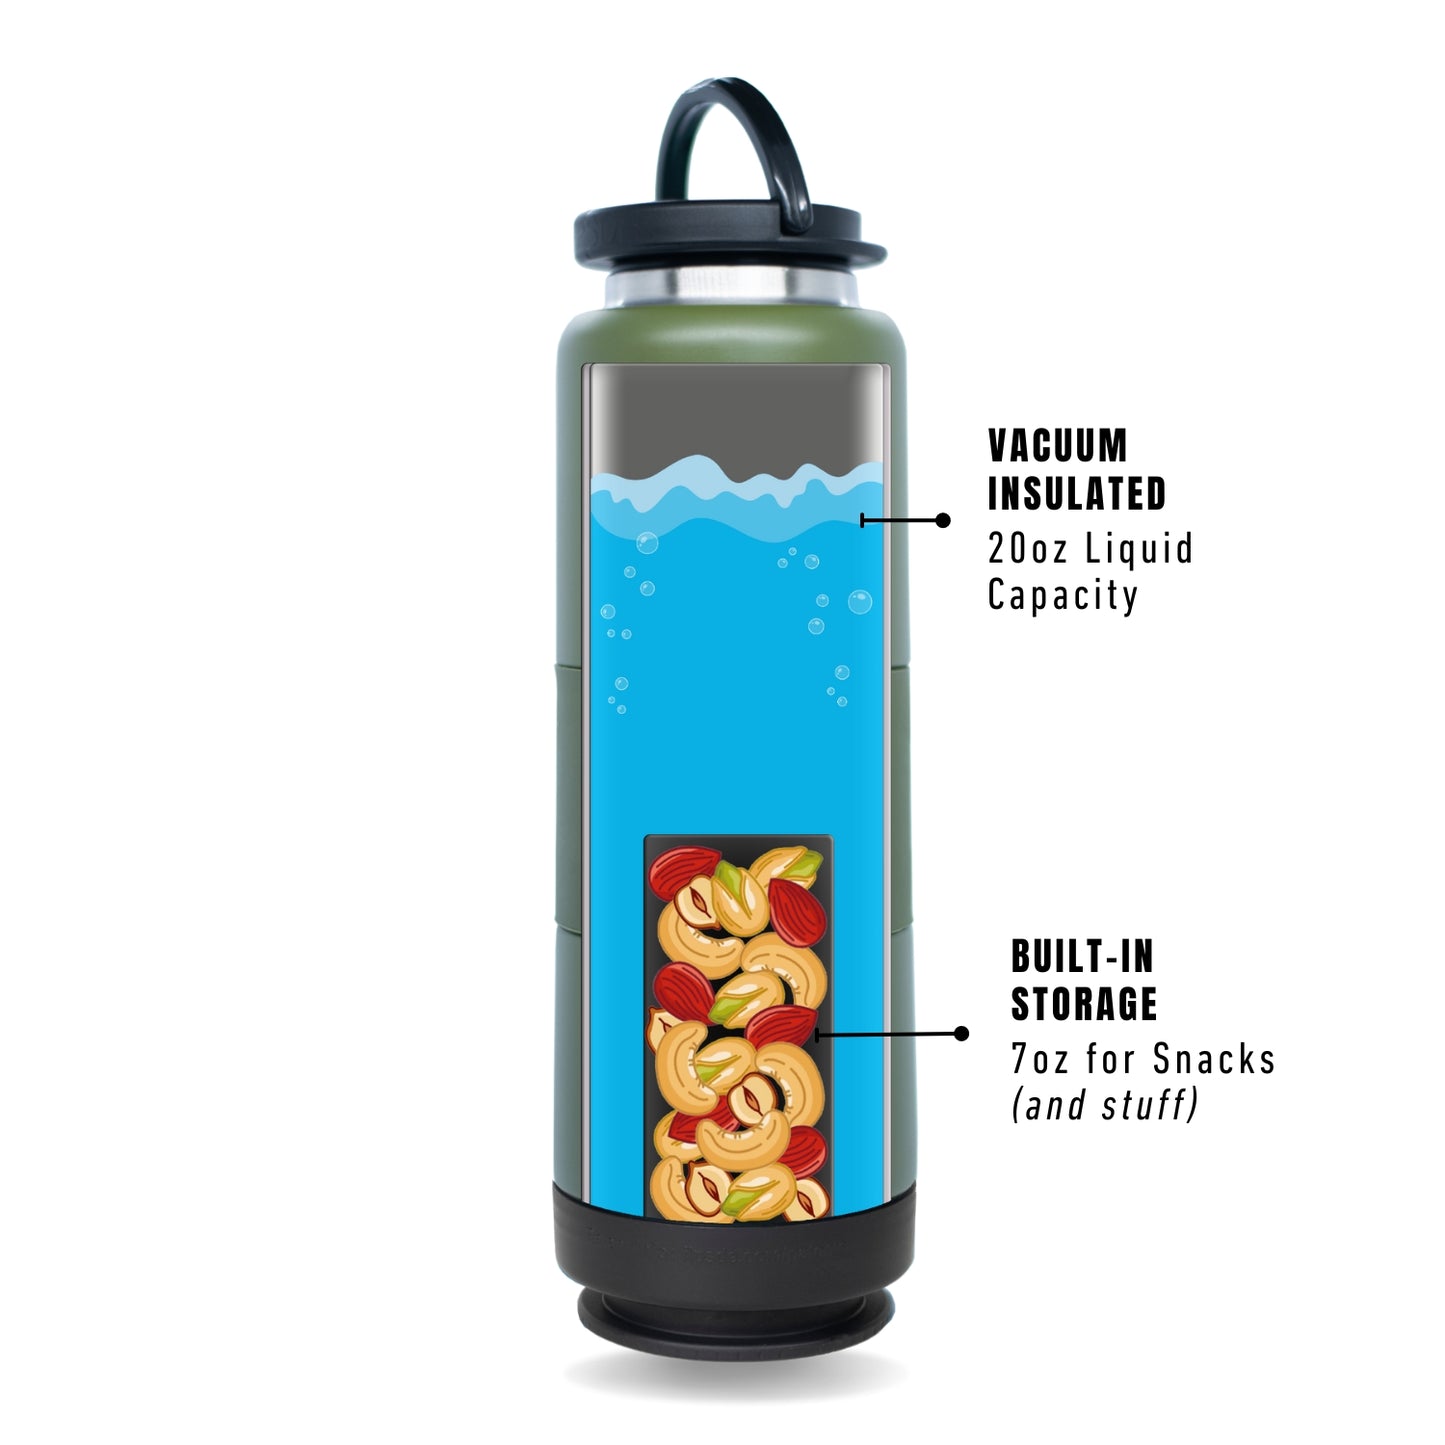 Evergreen | FLPSDE Water Bottle with Snack Storage